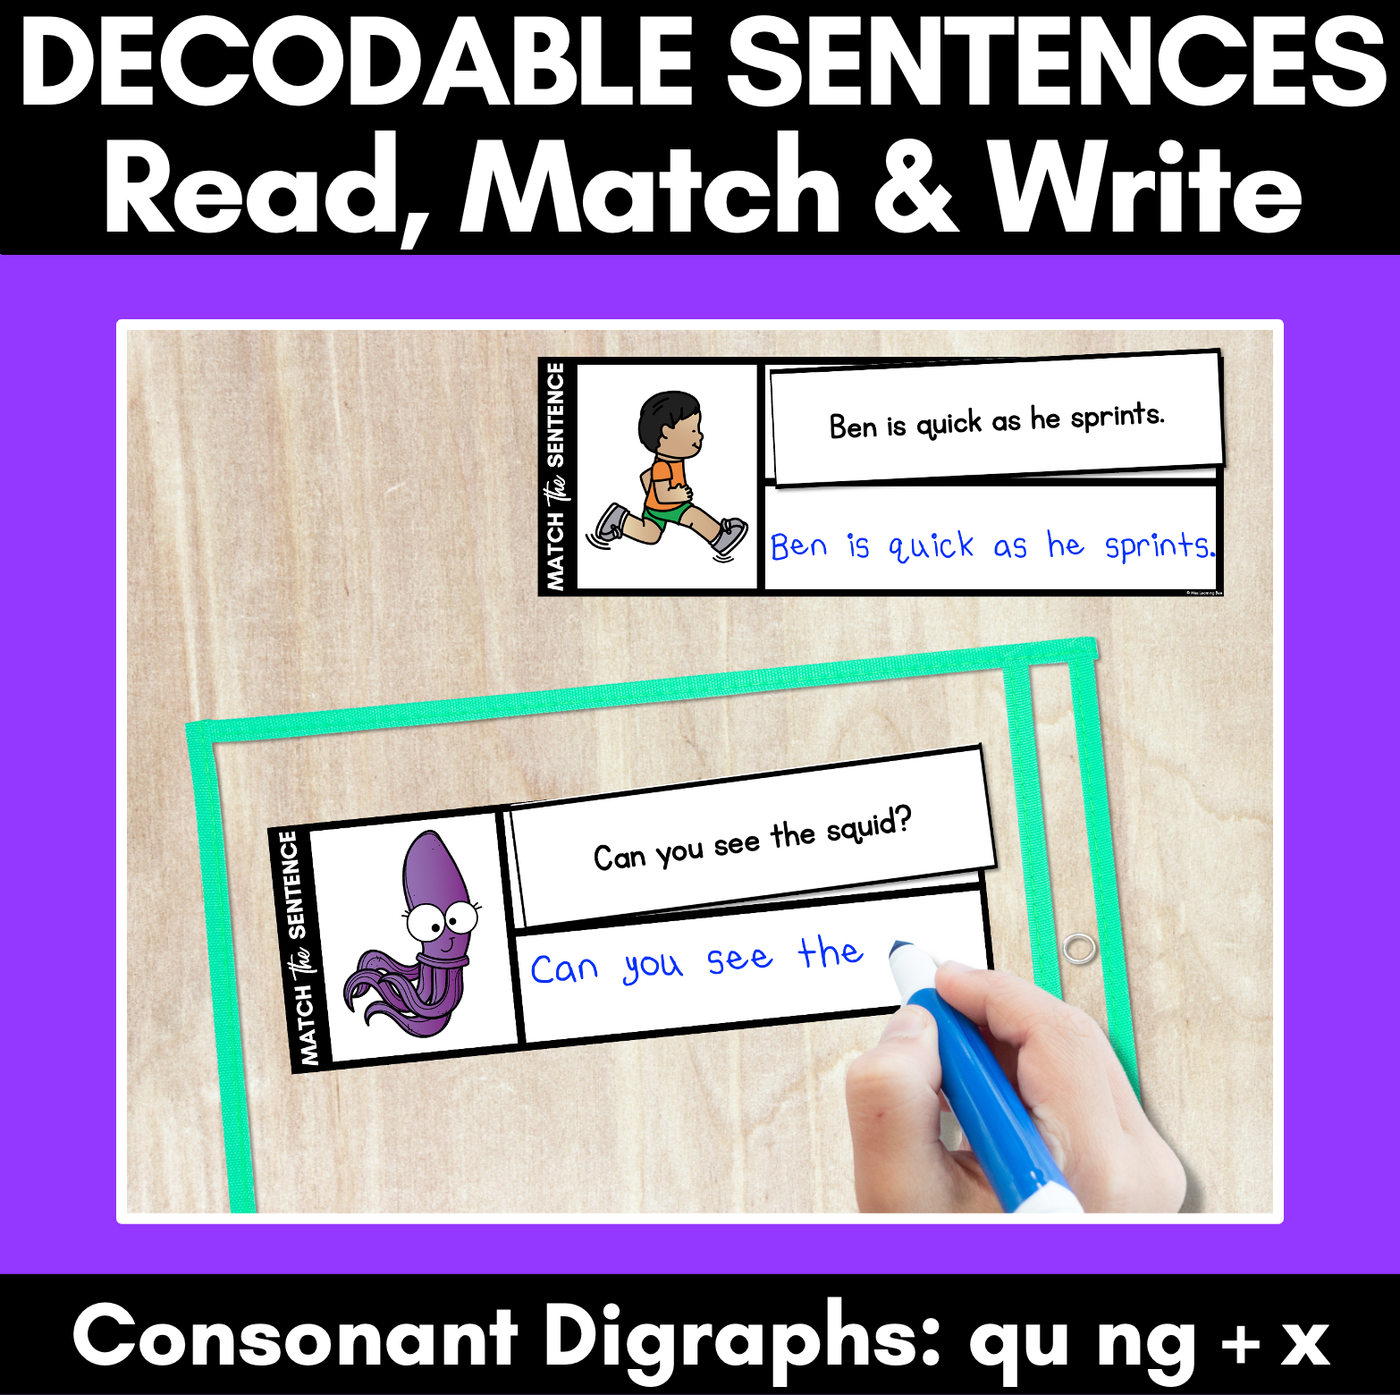 QU NG X Decodable Sentences - Read, Match & Write